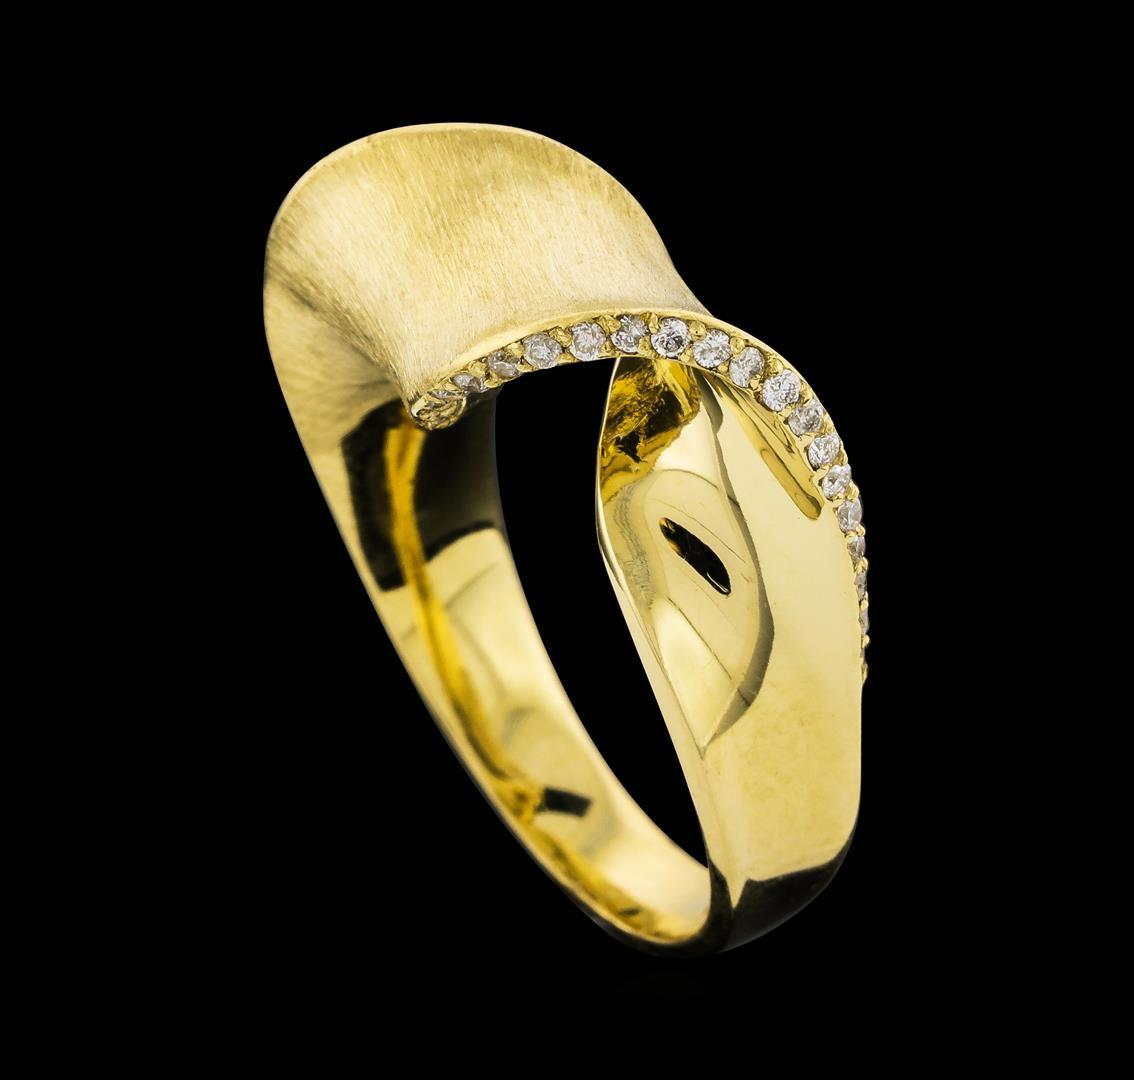 0.15 ctw Diamond Ring - 14KT Yellow Gold